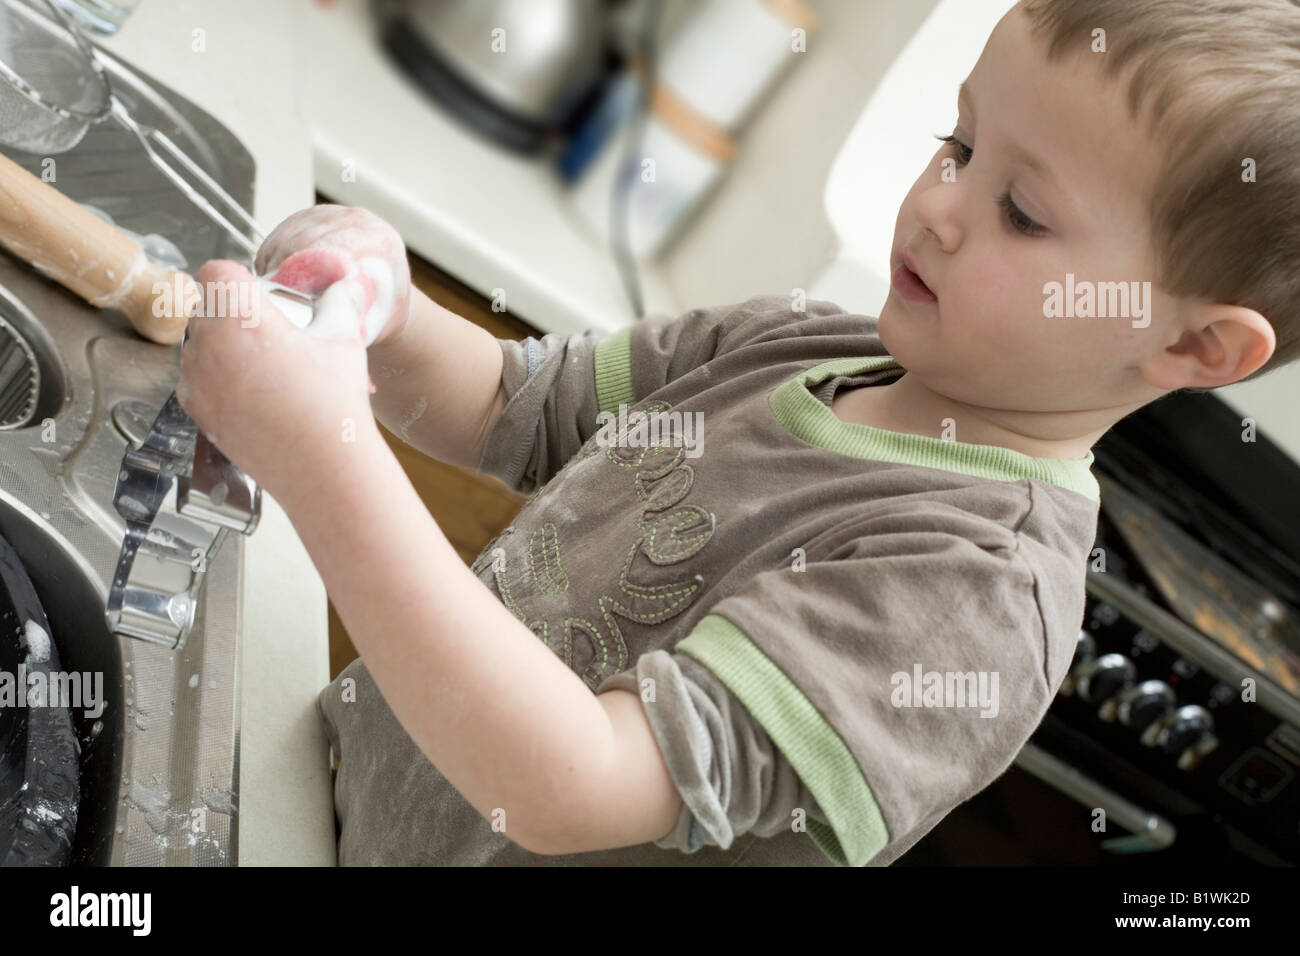 Child Washing Up at Kitchen Sink Stock Photo